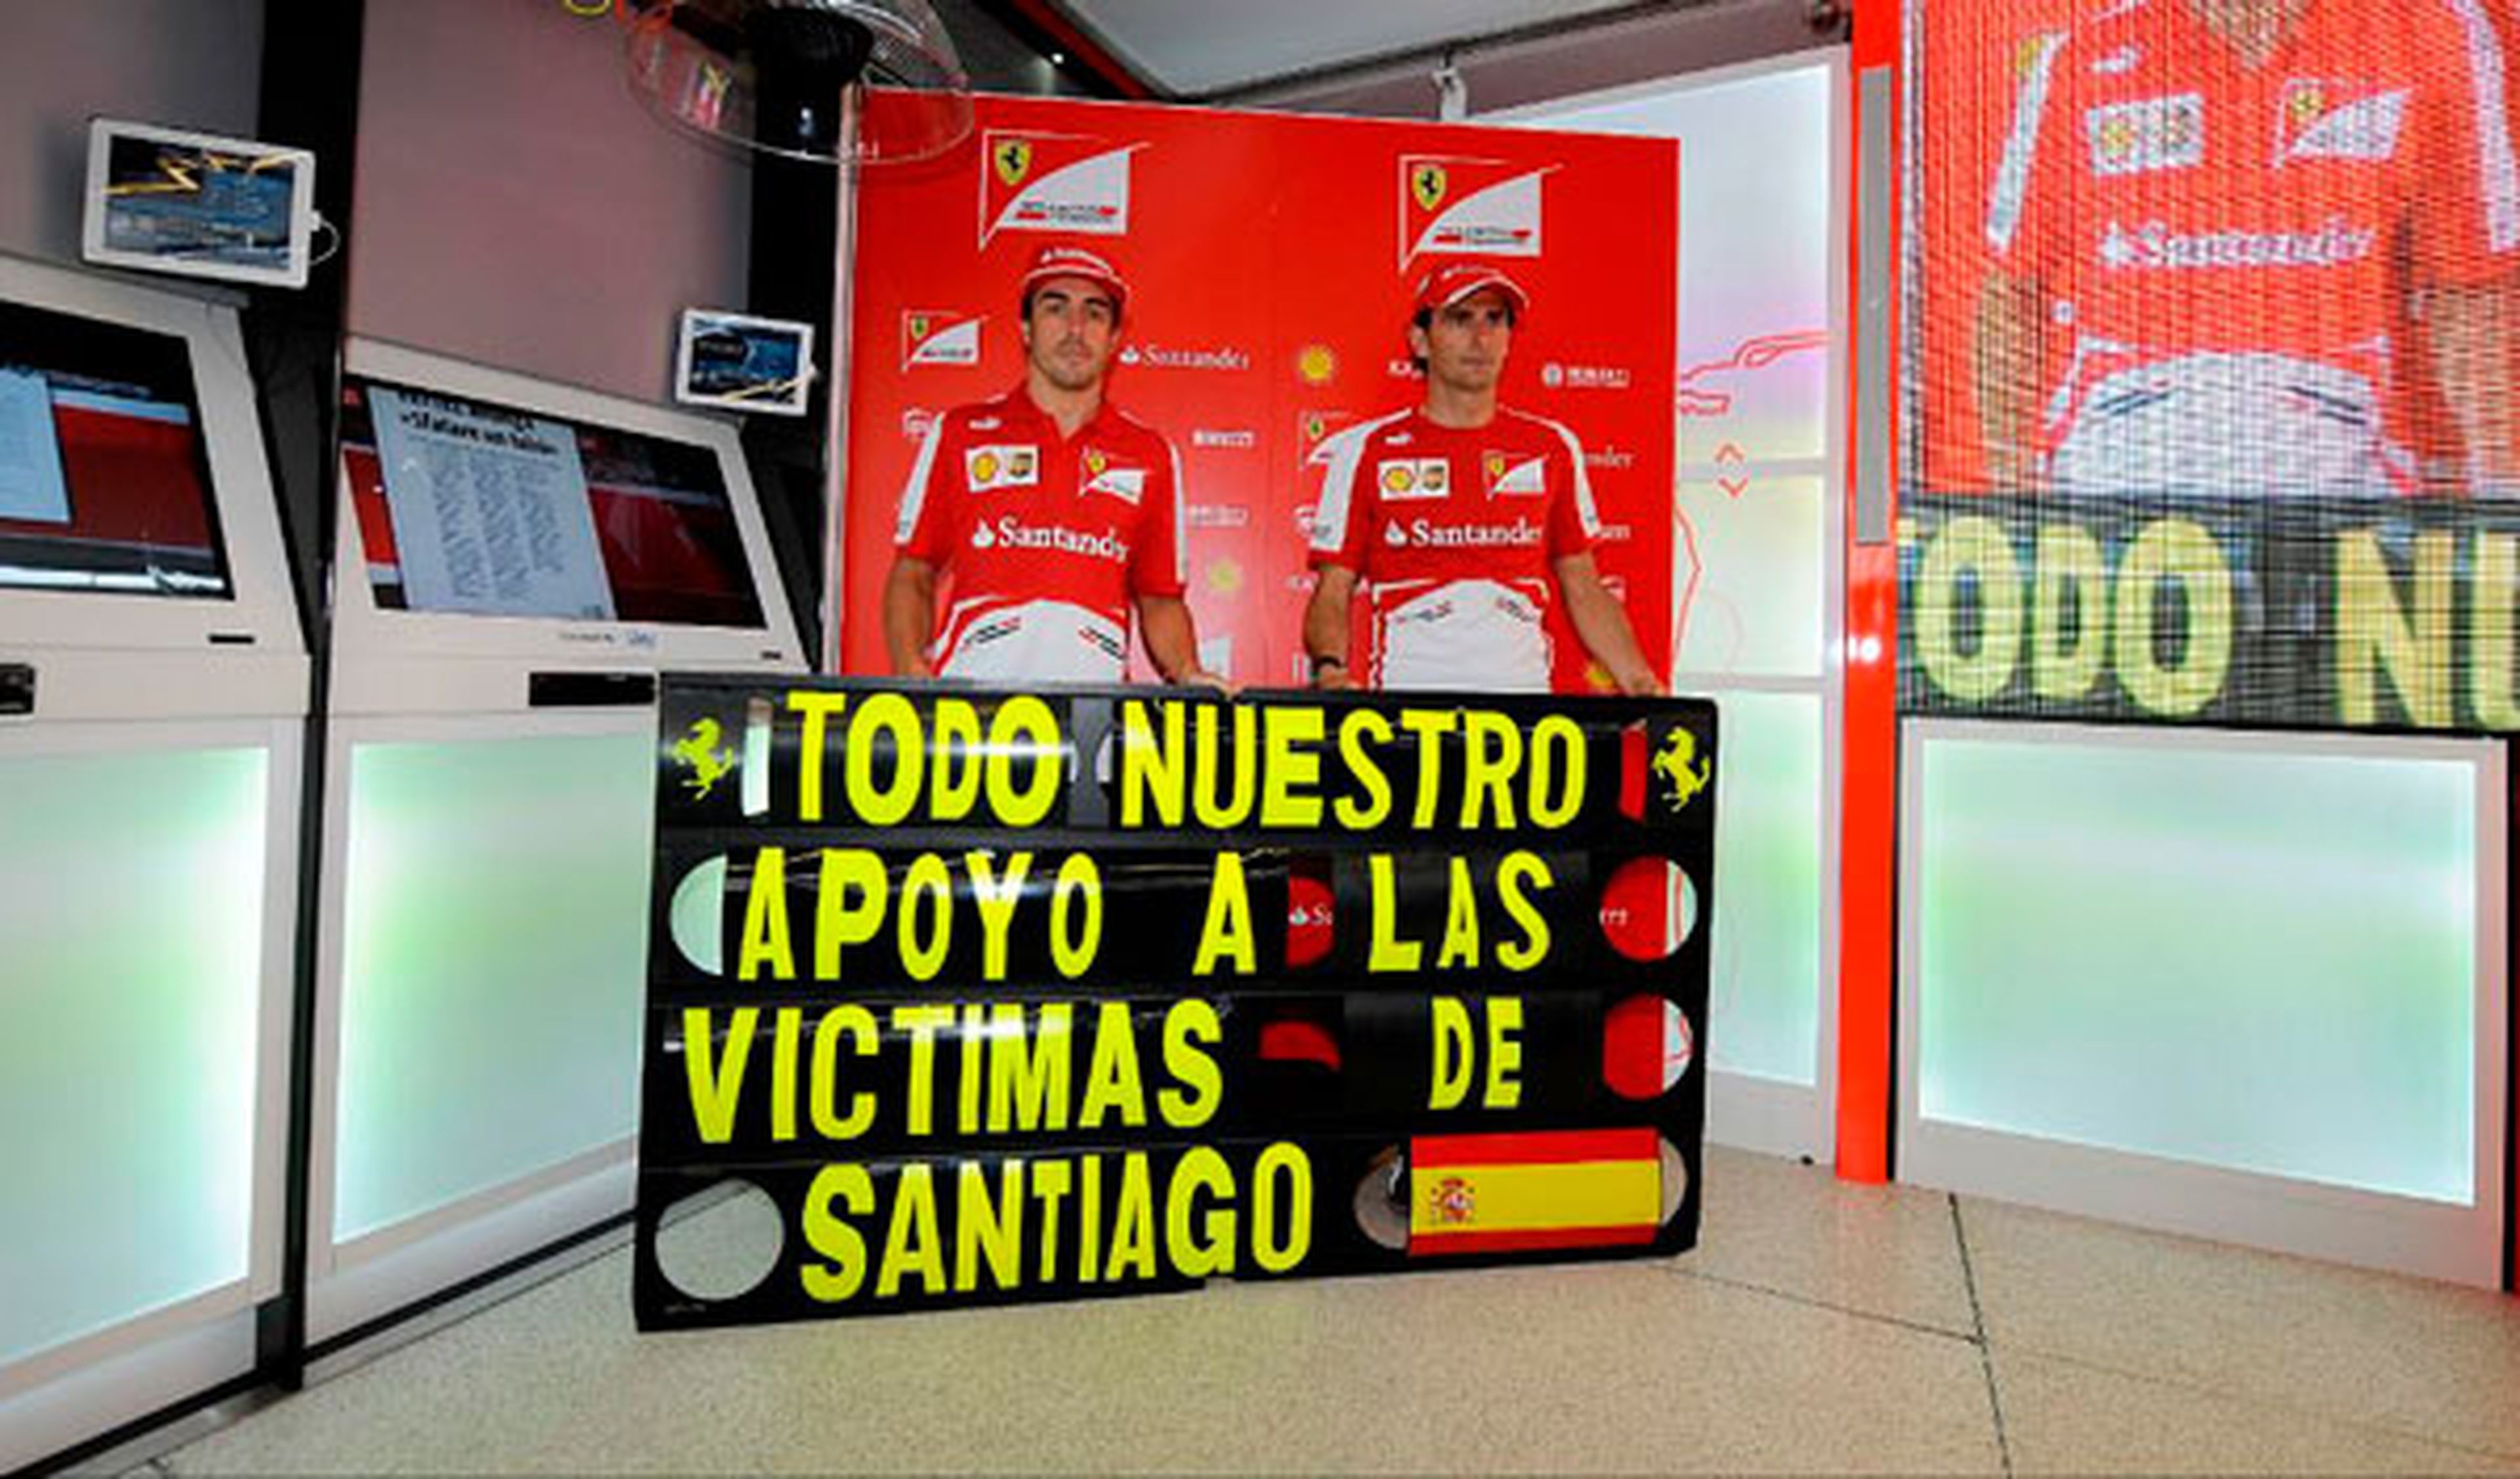 Fernando Alonso - Pedro de la Rosa - Ferrari - Homenaje - Accidente Santiango